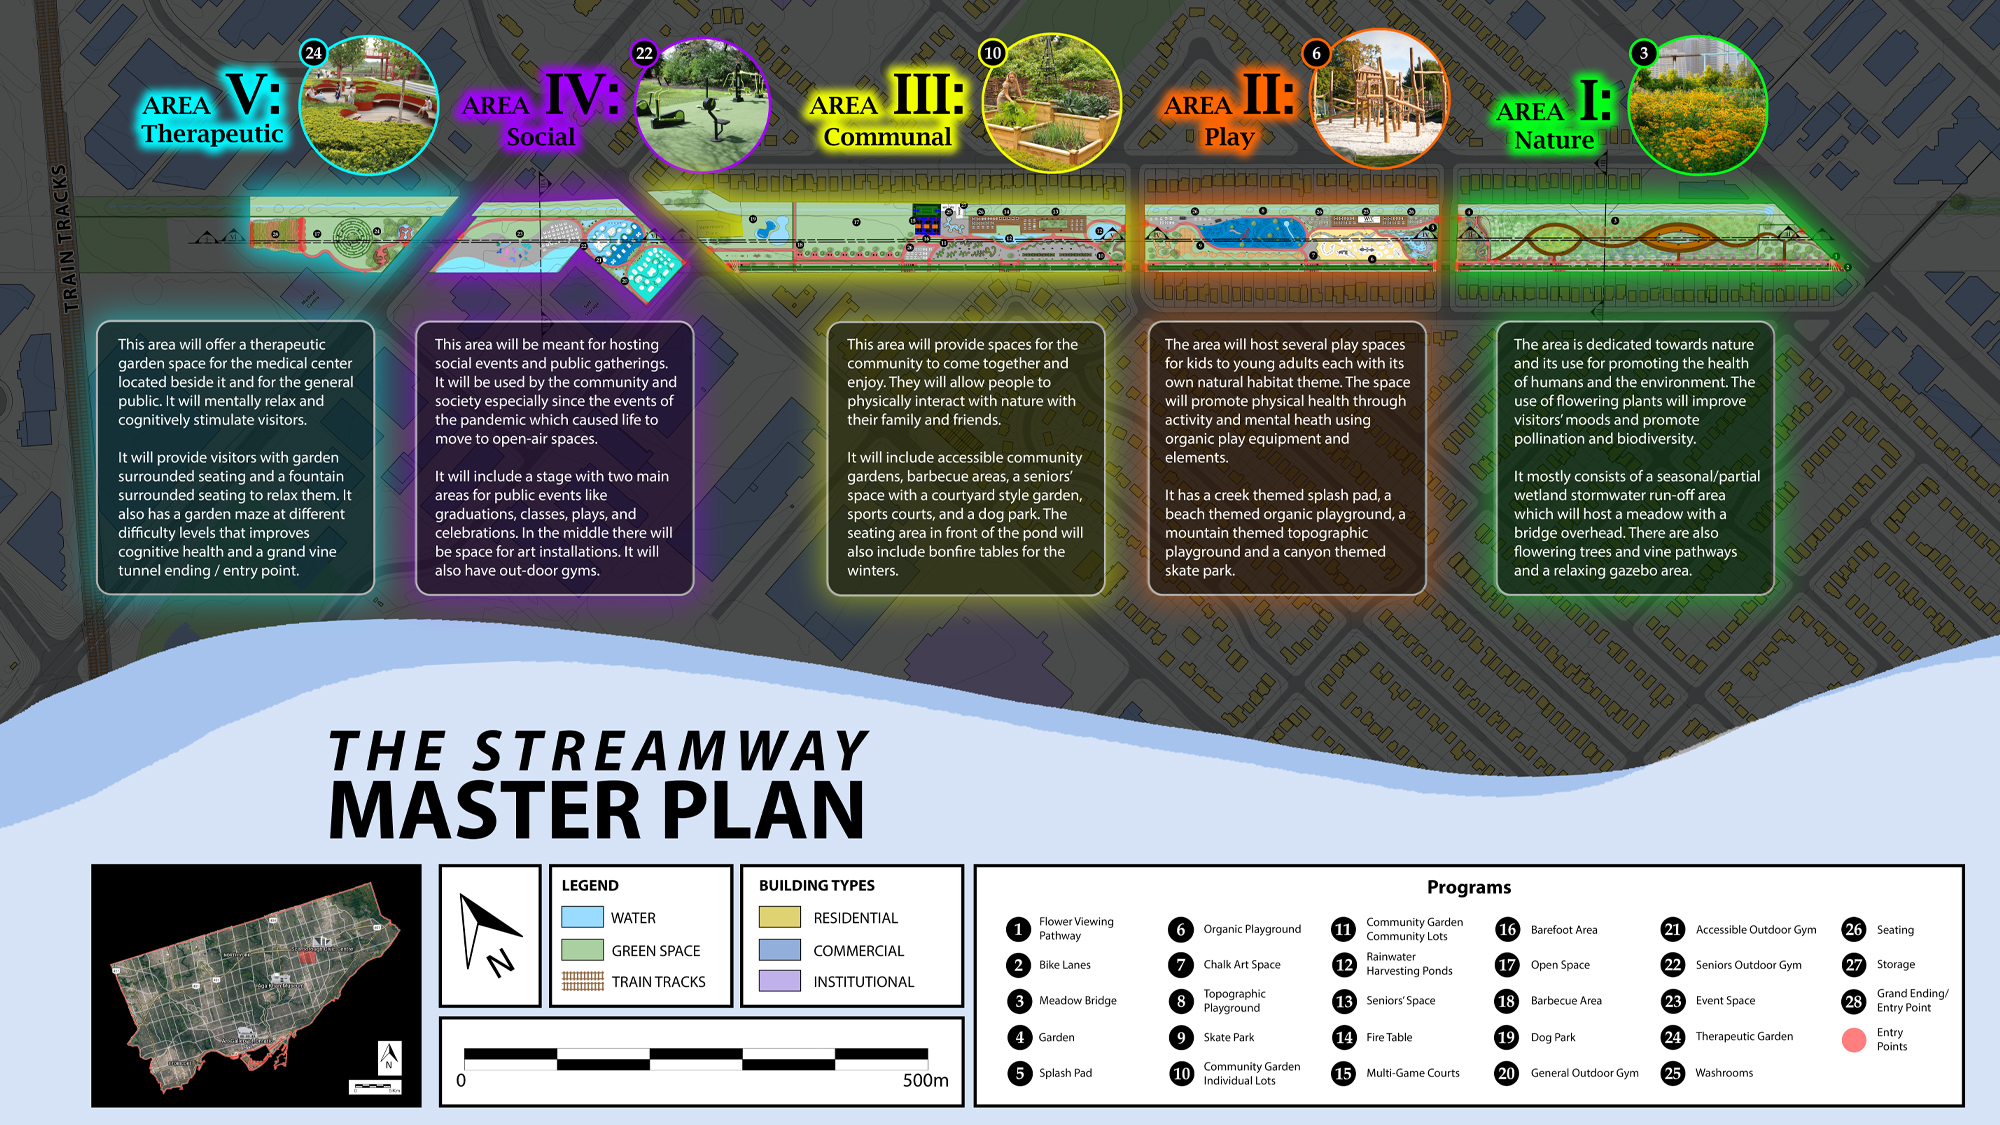 The Streamway - Mater Plan (Main Image)